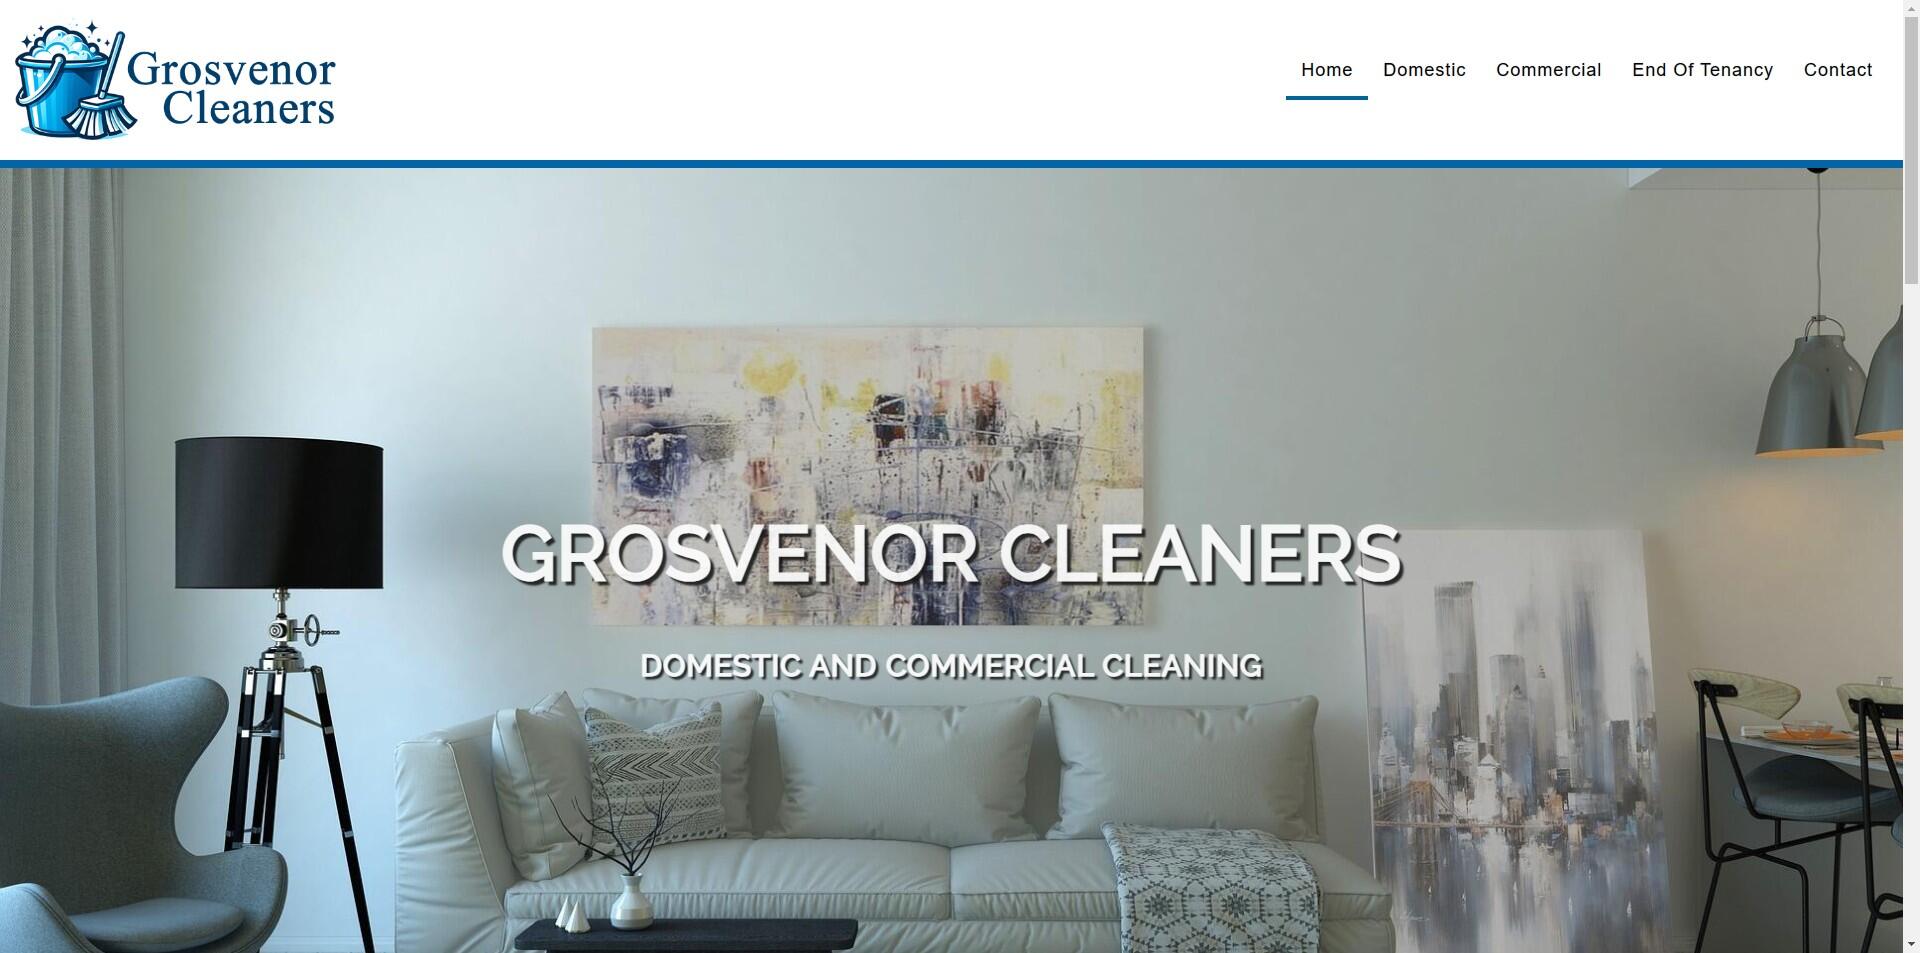 website designed for Grosvenor Cleaners